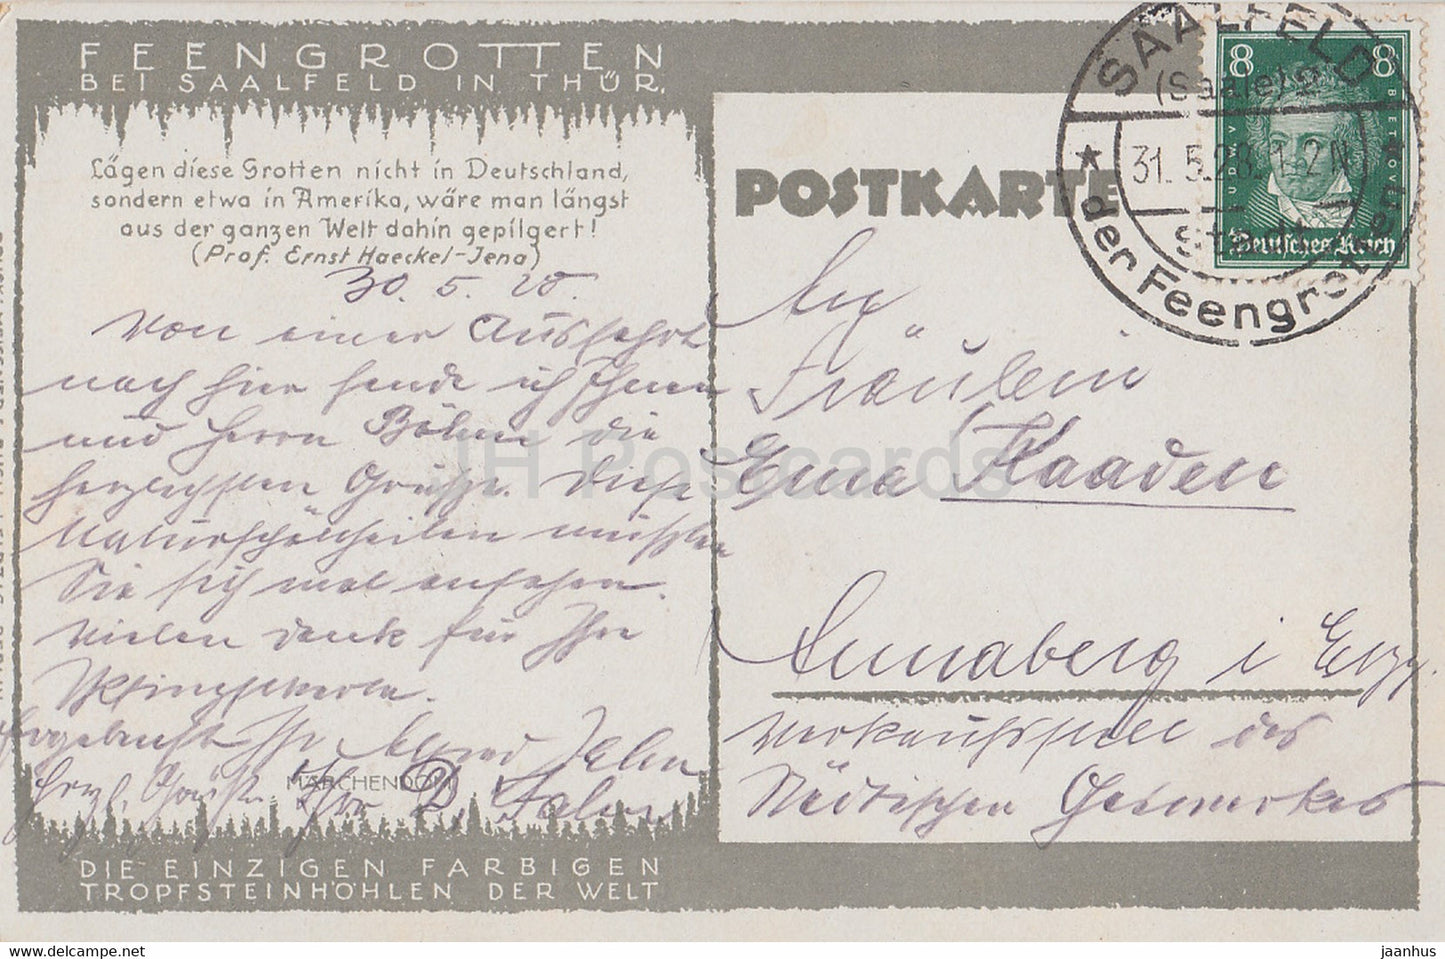 Feengrotten von Saalfeld in Th - Marchendom - grotte - carte postale ancienne - 1928 - Allemagne - utilisé